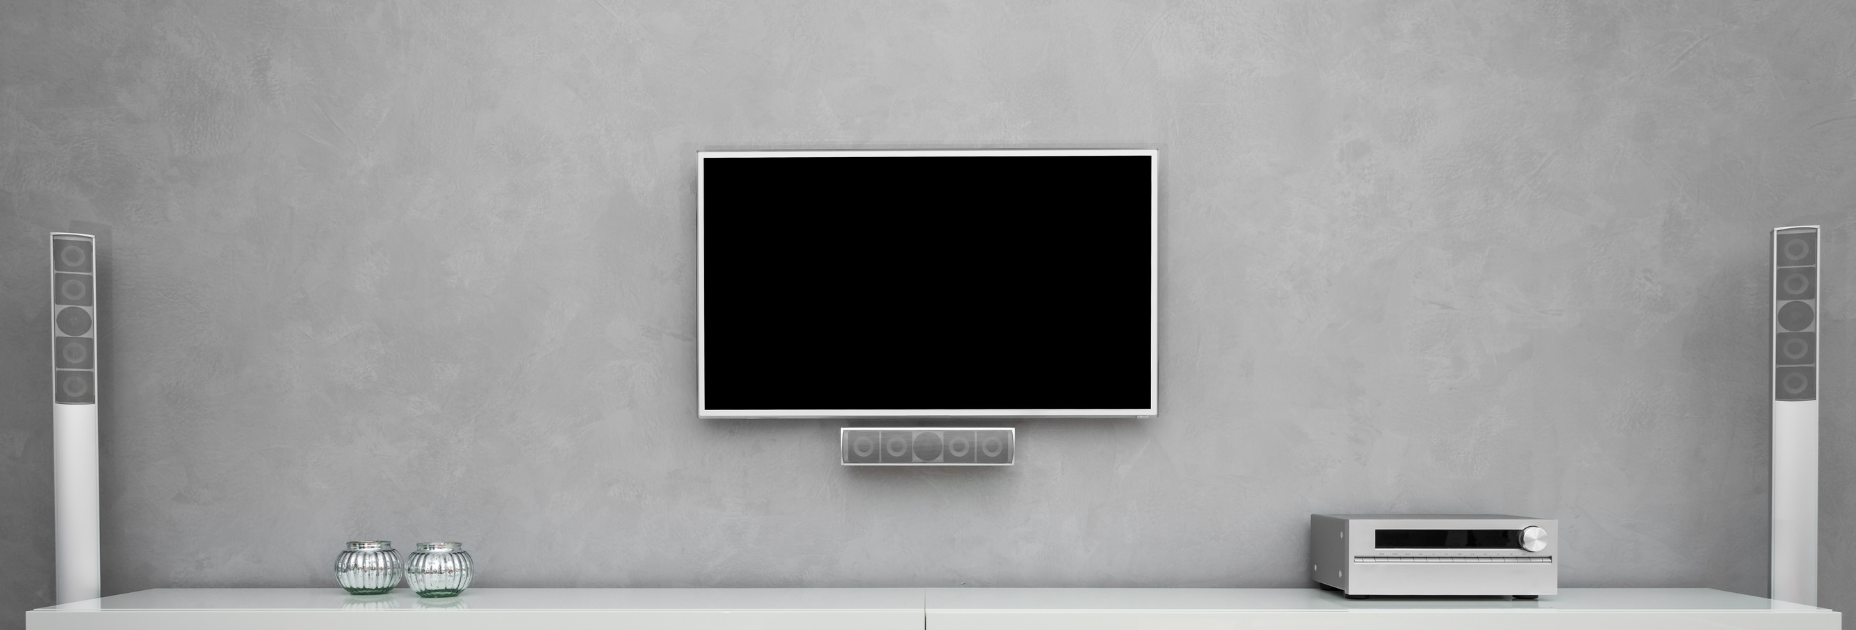 Проектор или телевизор для квартиры